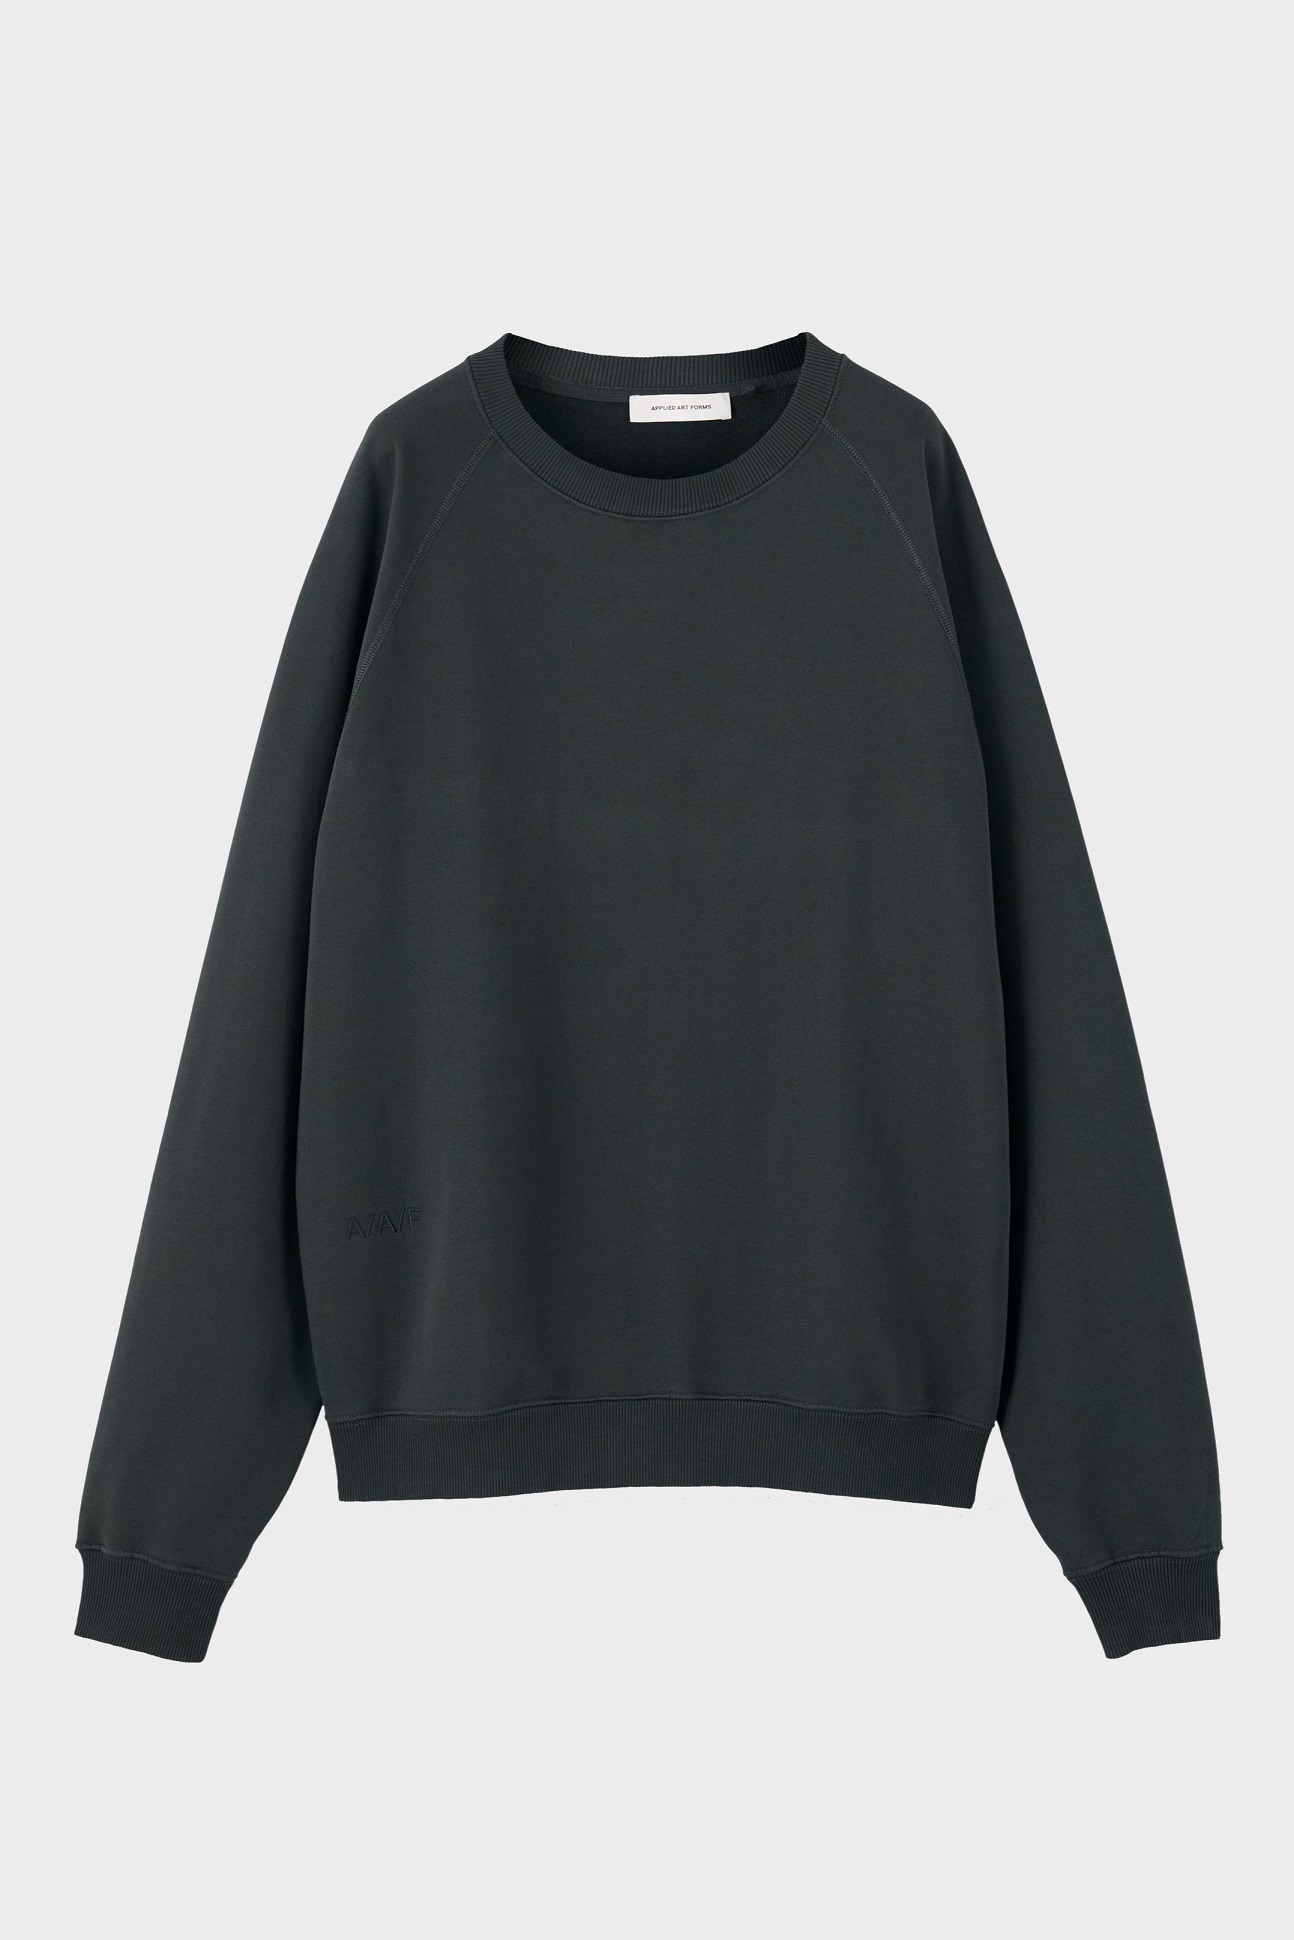 APPLIED ART FORMS Raglan Sweater in Charcoal XS